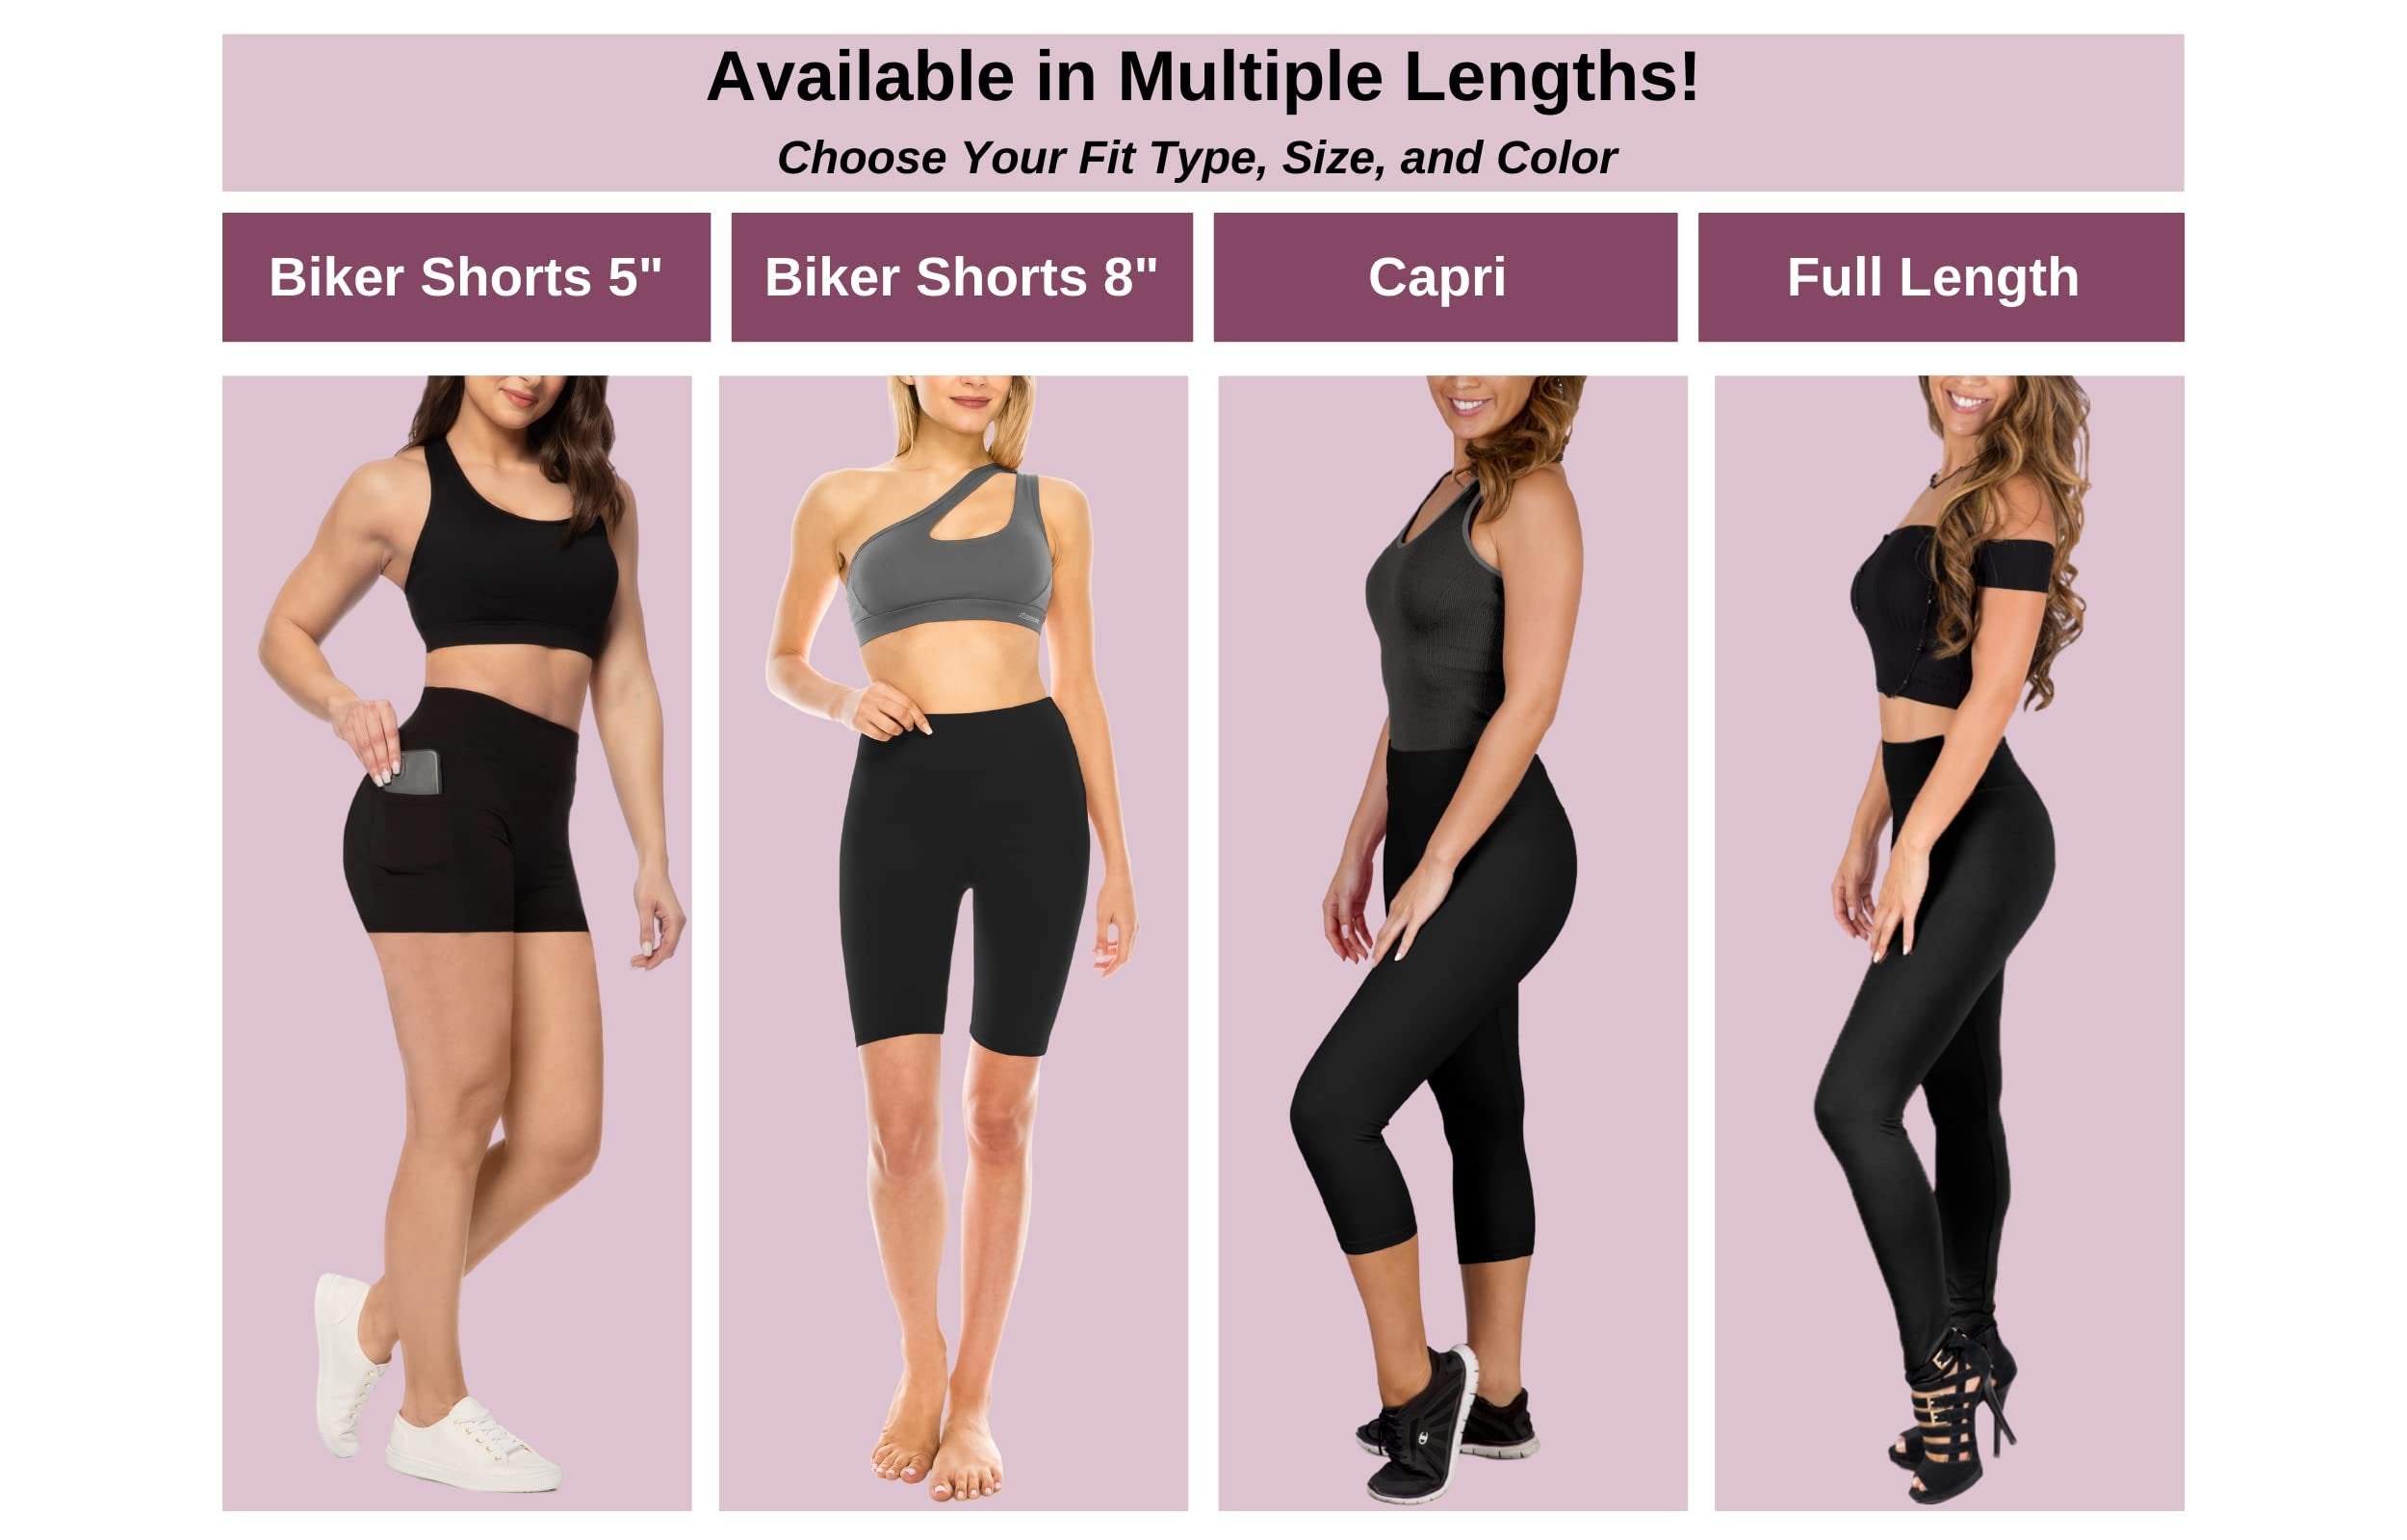 Free Ship SATINA Olive High-Waisted Capri Leggings - Tummy Control, Yoga Pants - 3 Waistband - Size One